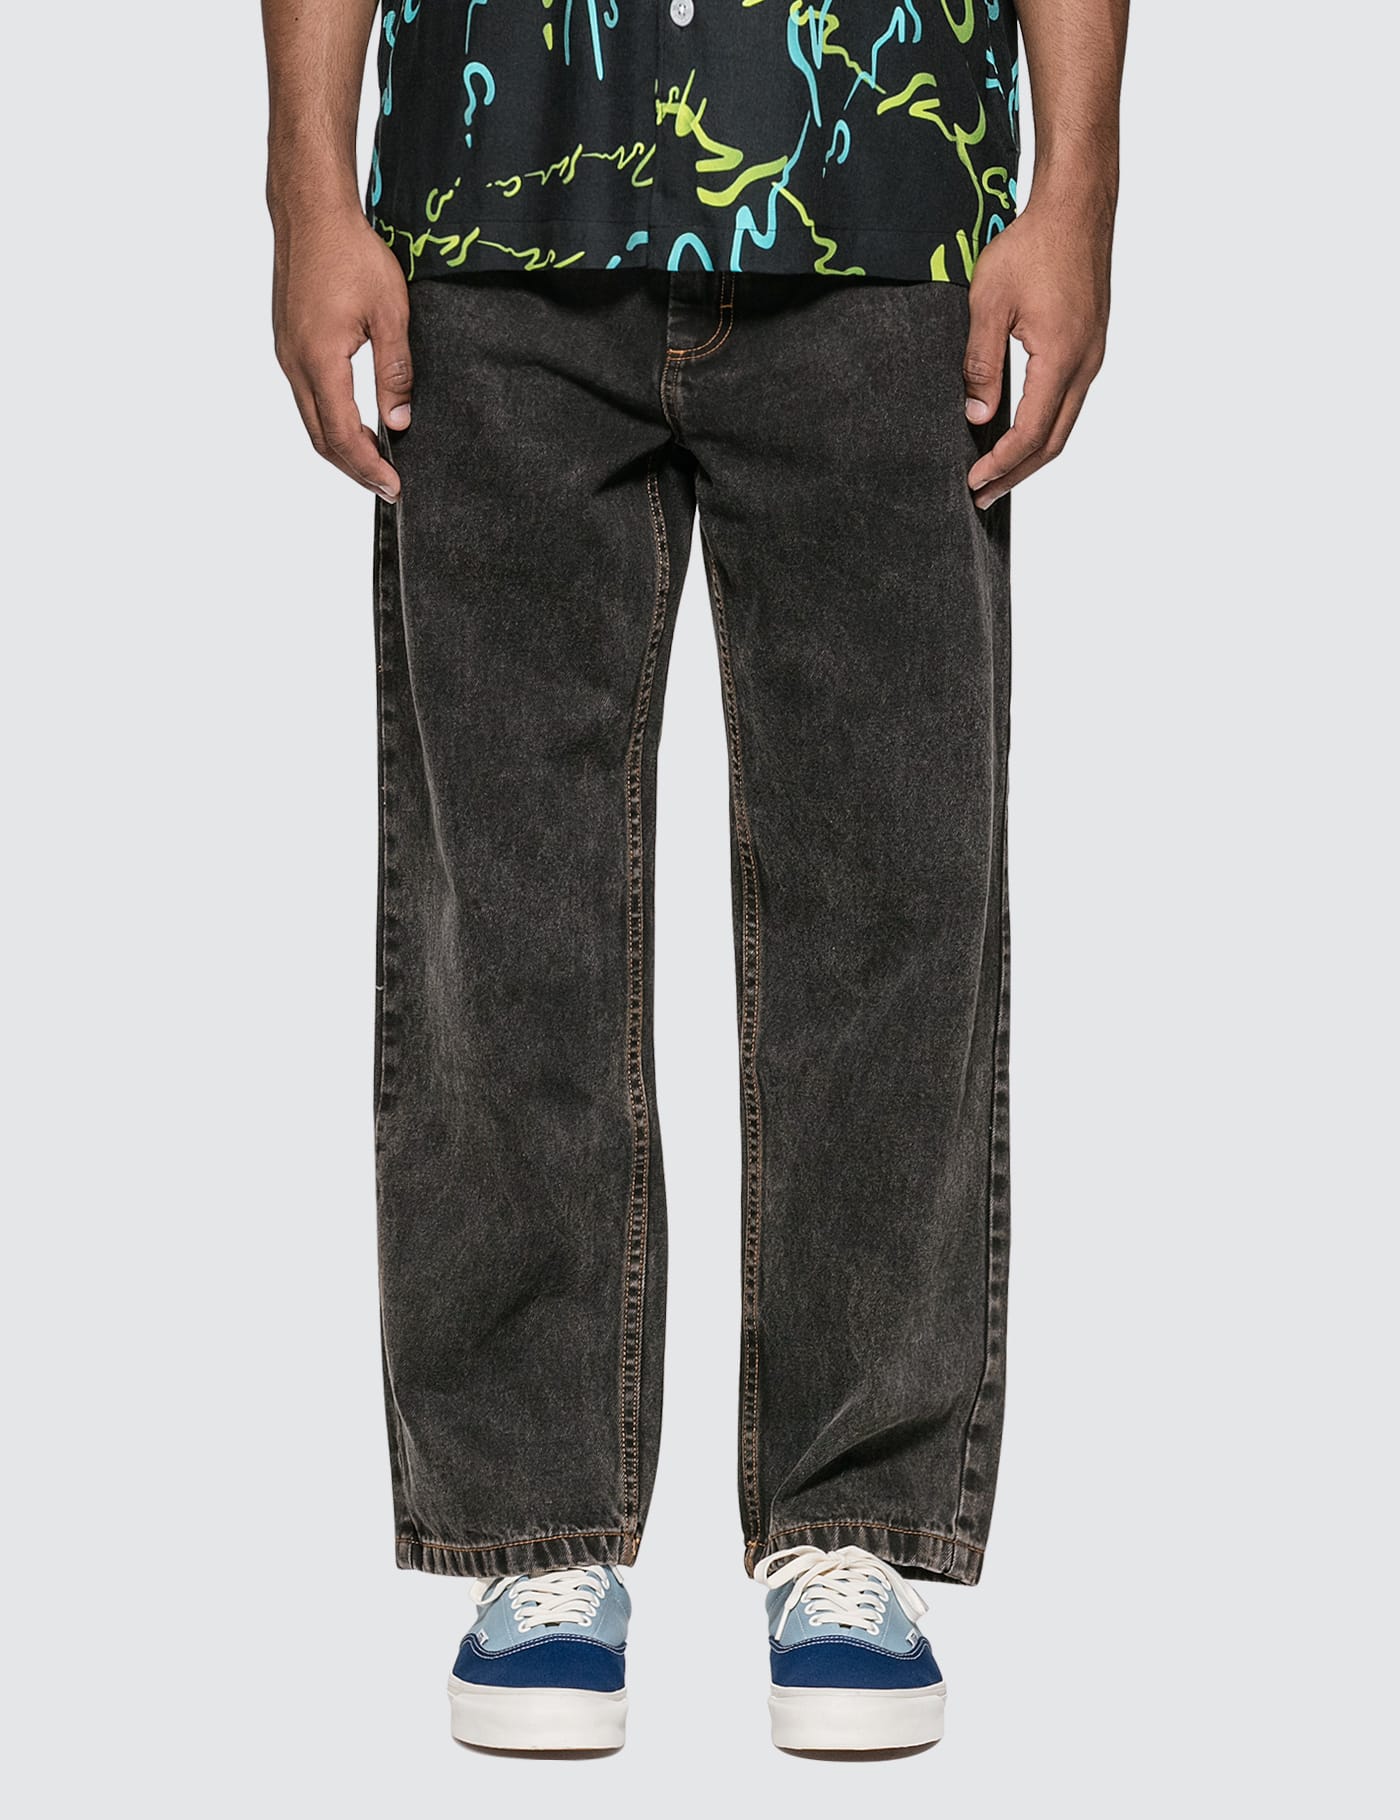 Polar Skate Co. - 93 Denim Jeans | HBX - Globally Curated Fashion 